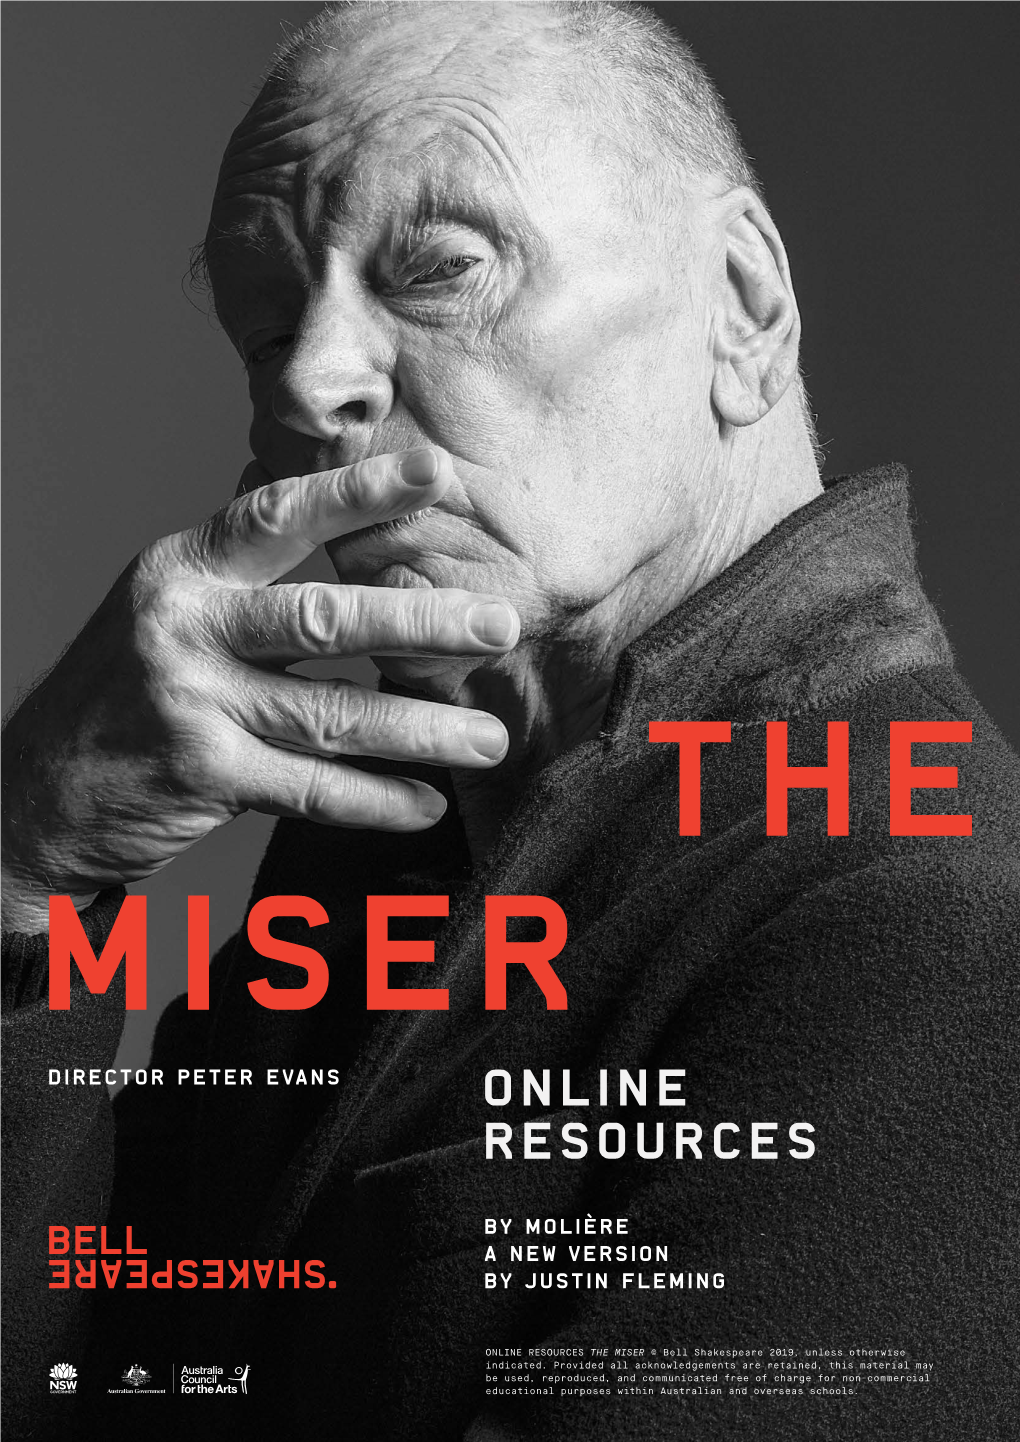 The Miser 2019 Online Resources 2